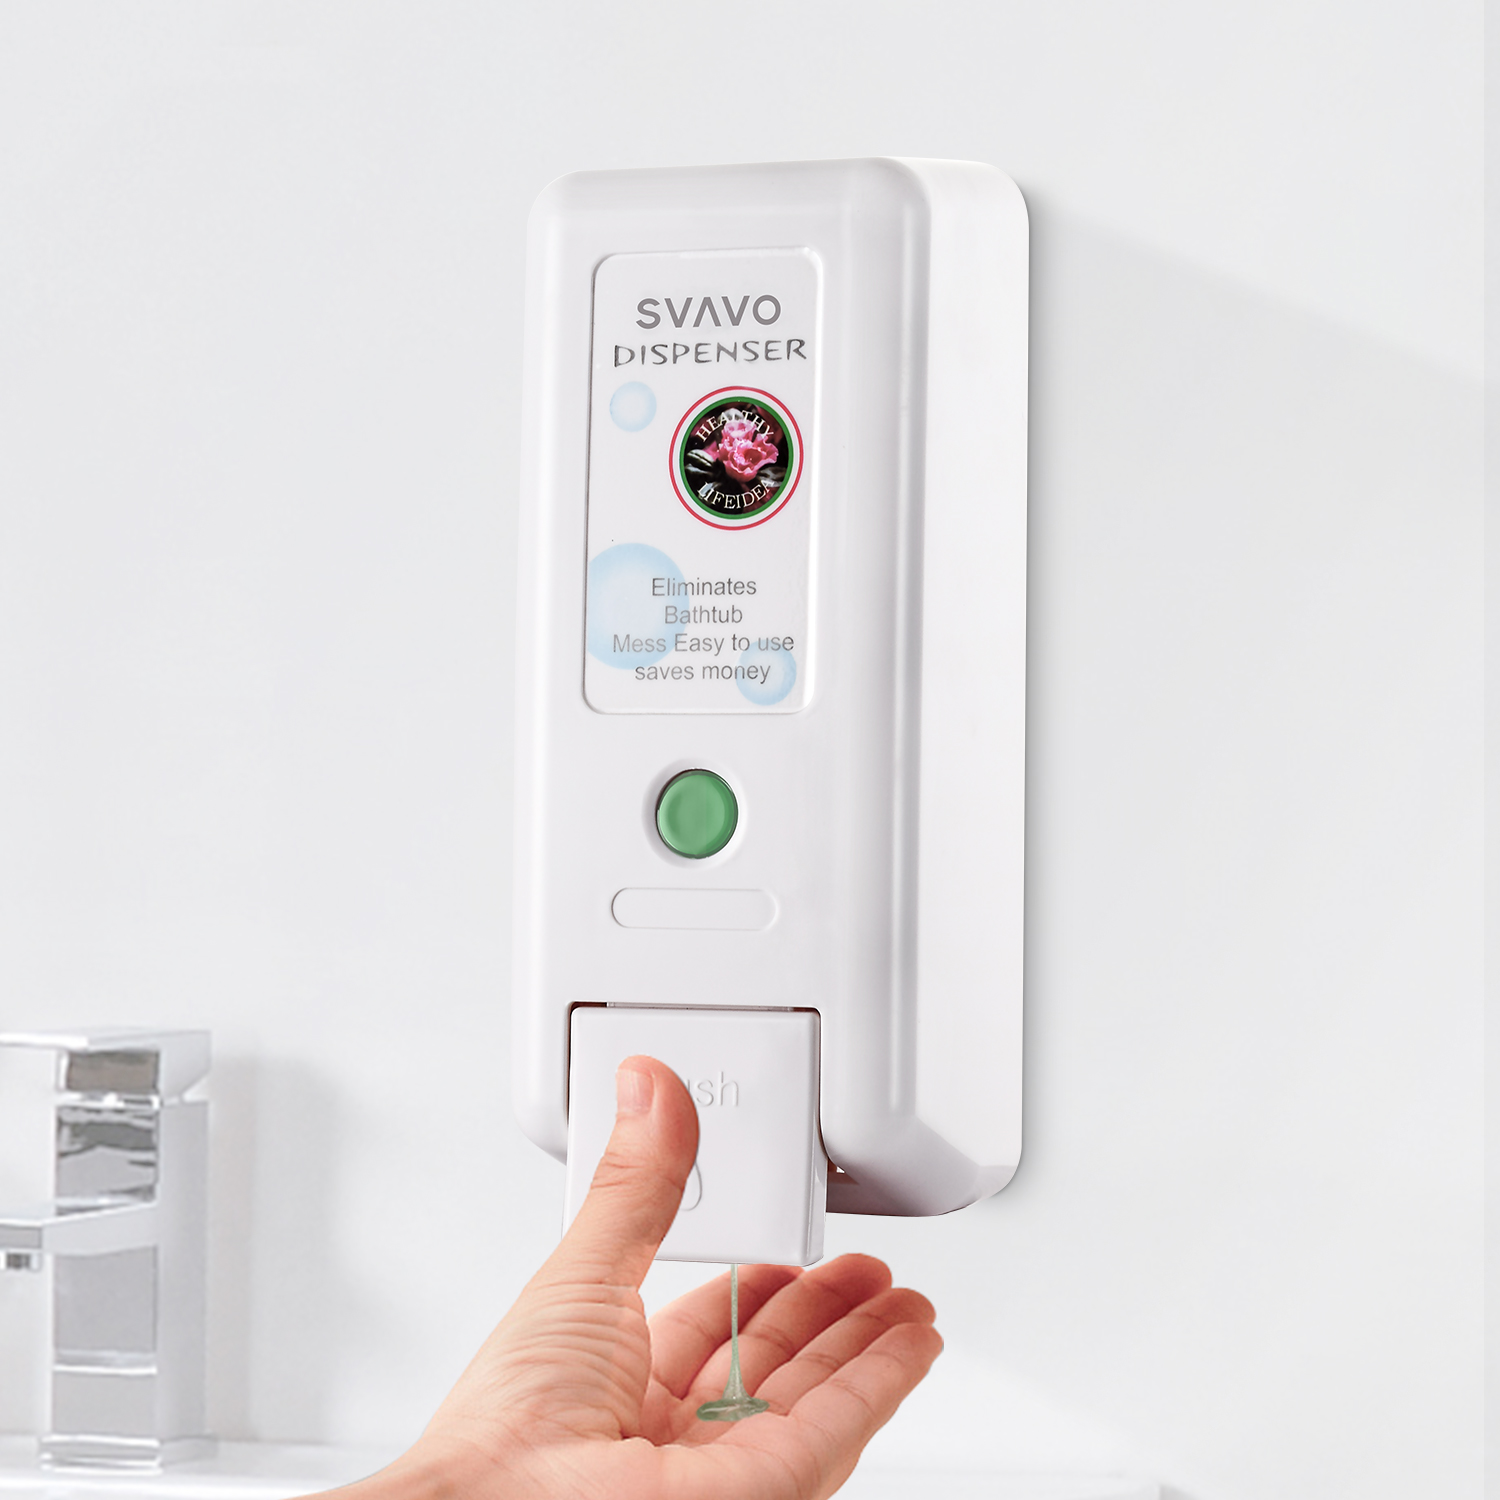 Shampoo Wall Dispenser V-2101 